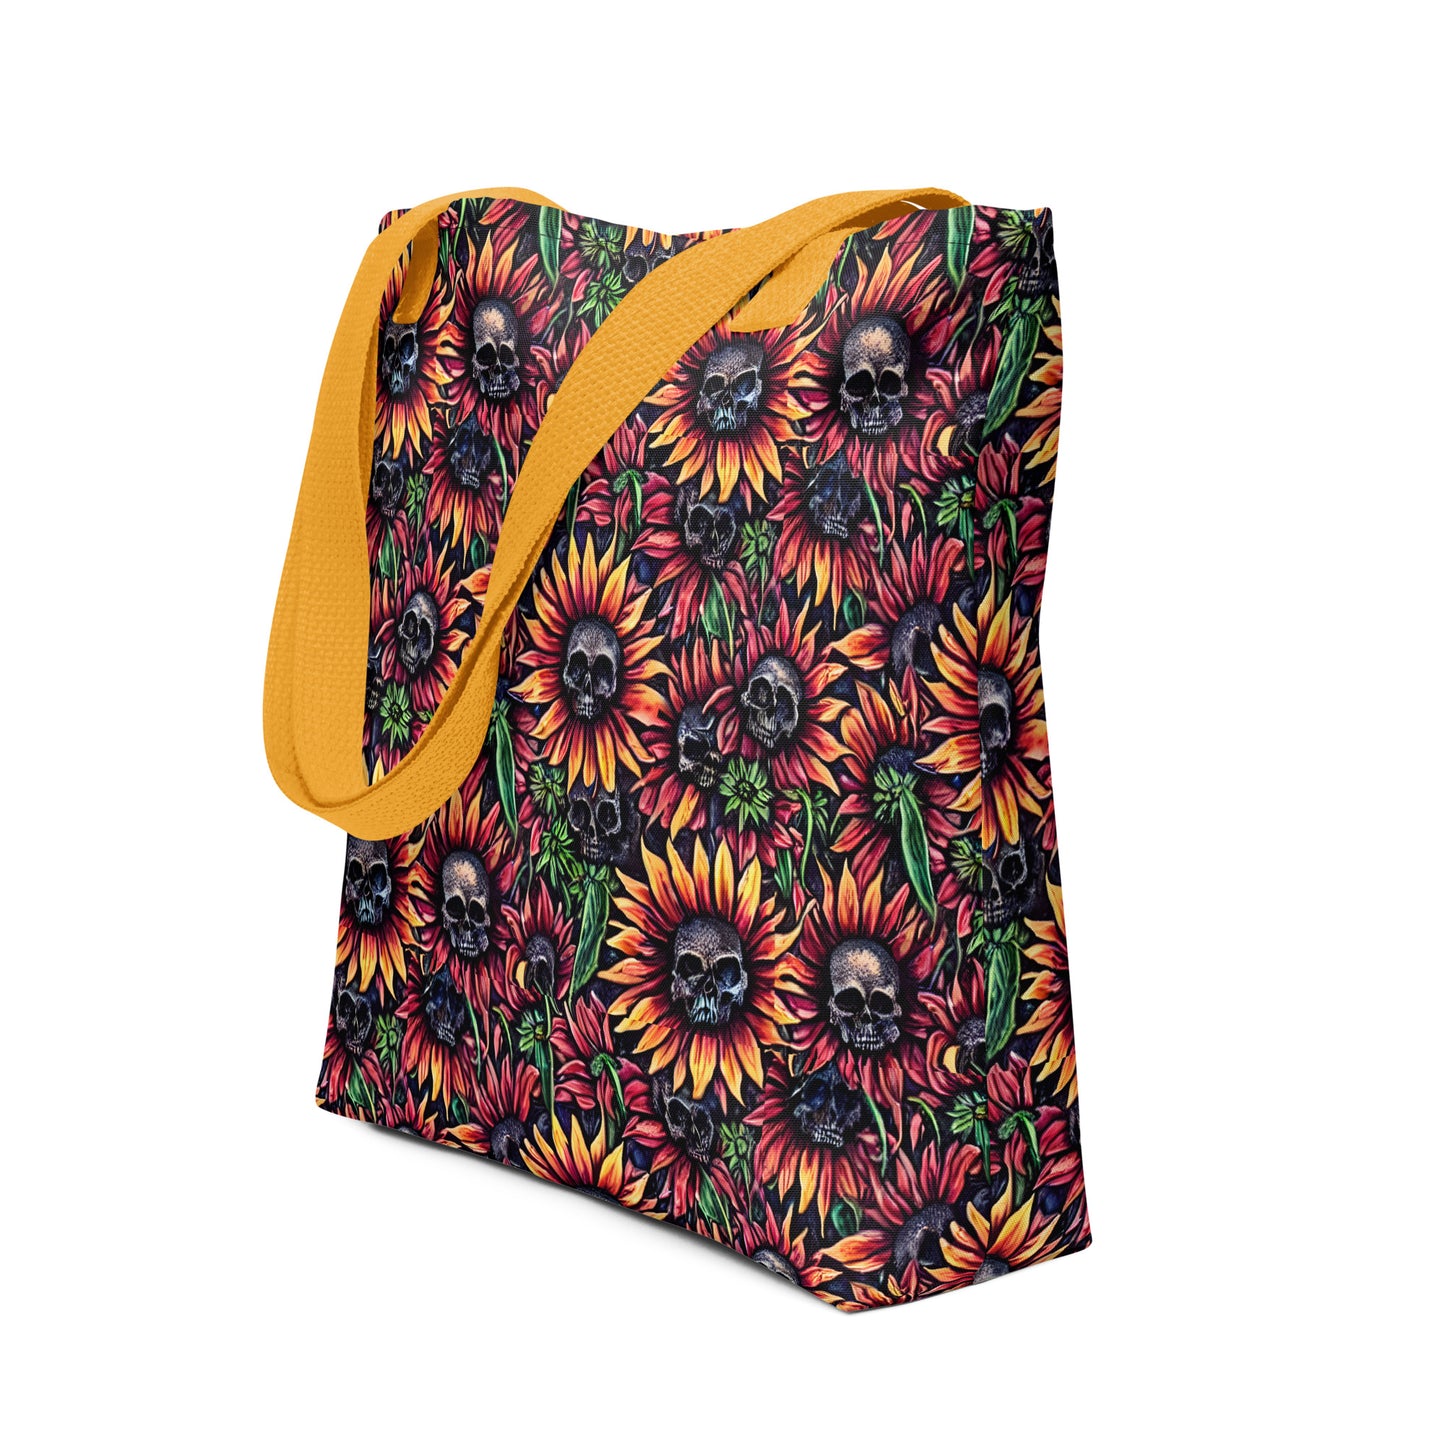 Sunflowers and Skulls Design Tote bag